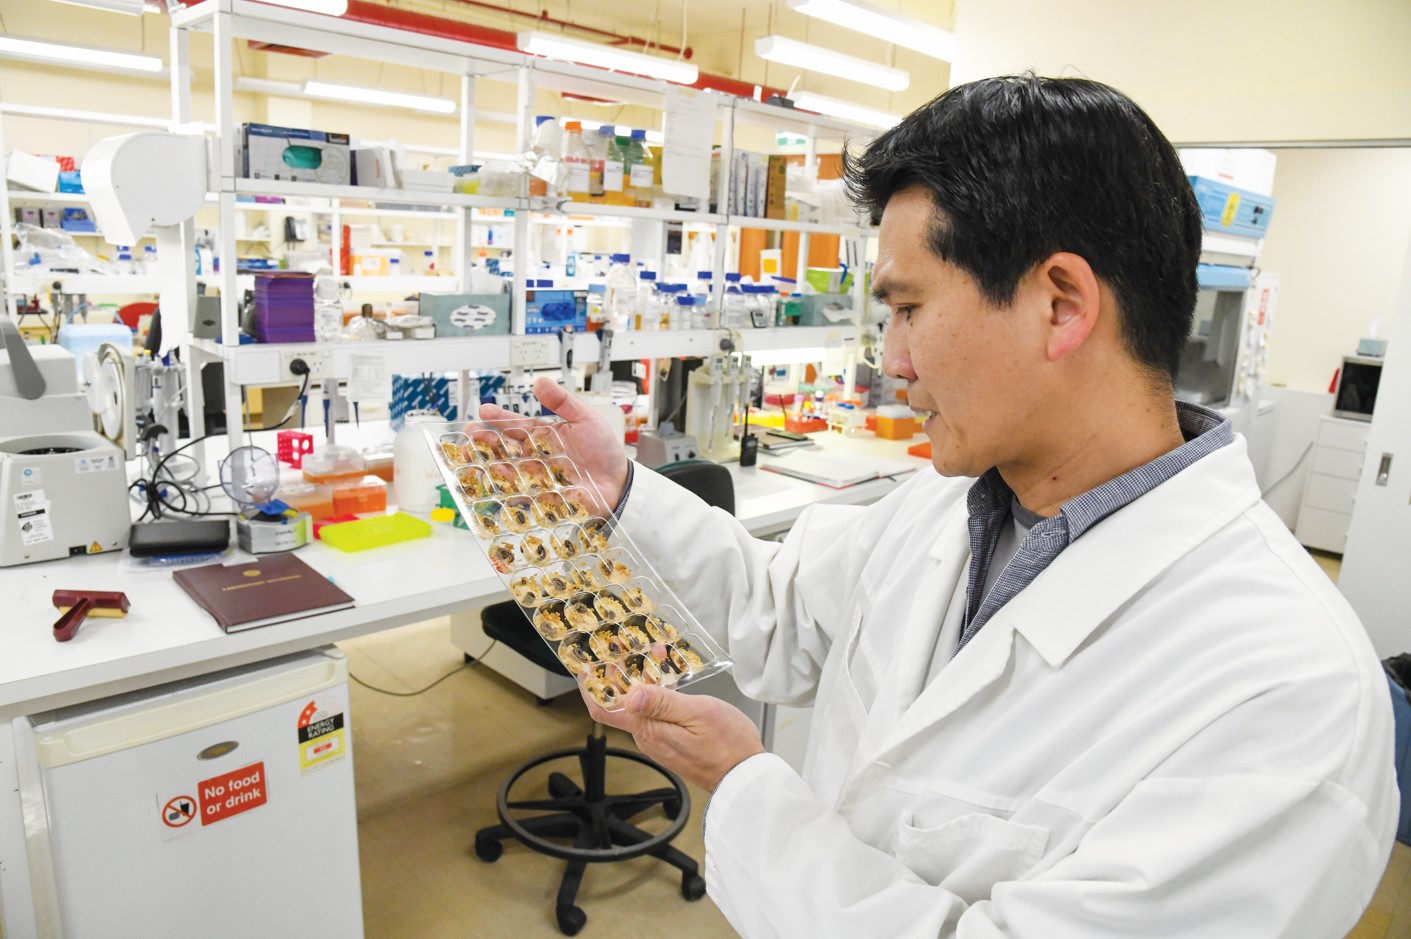 man in a lab examining samples